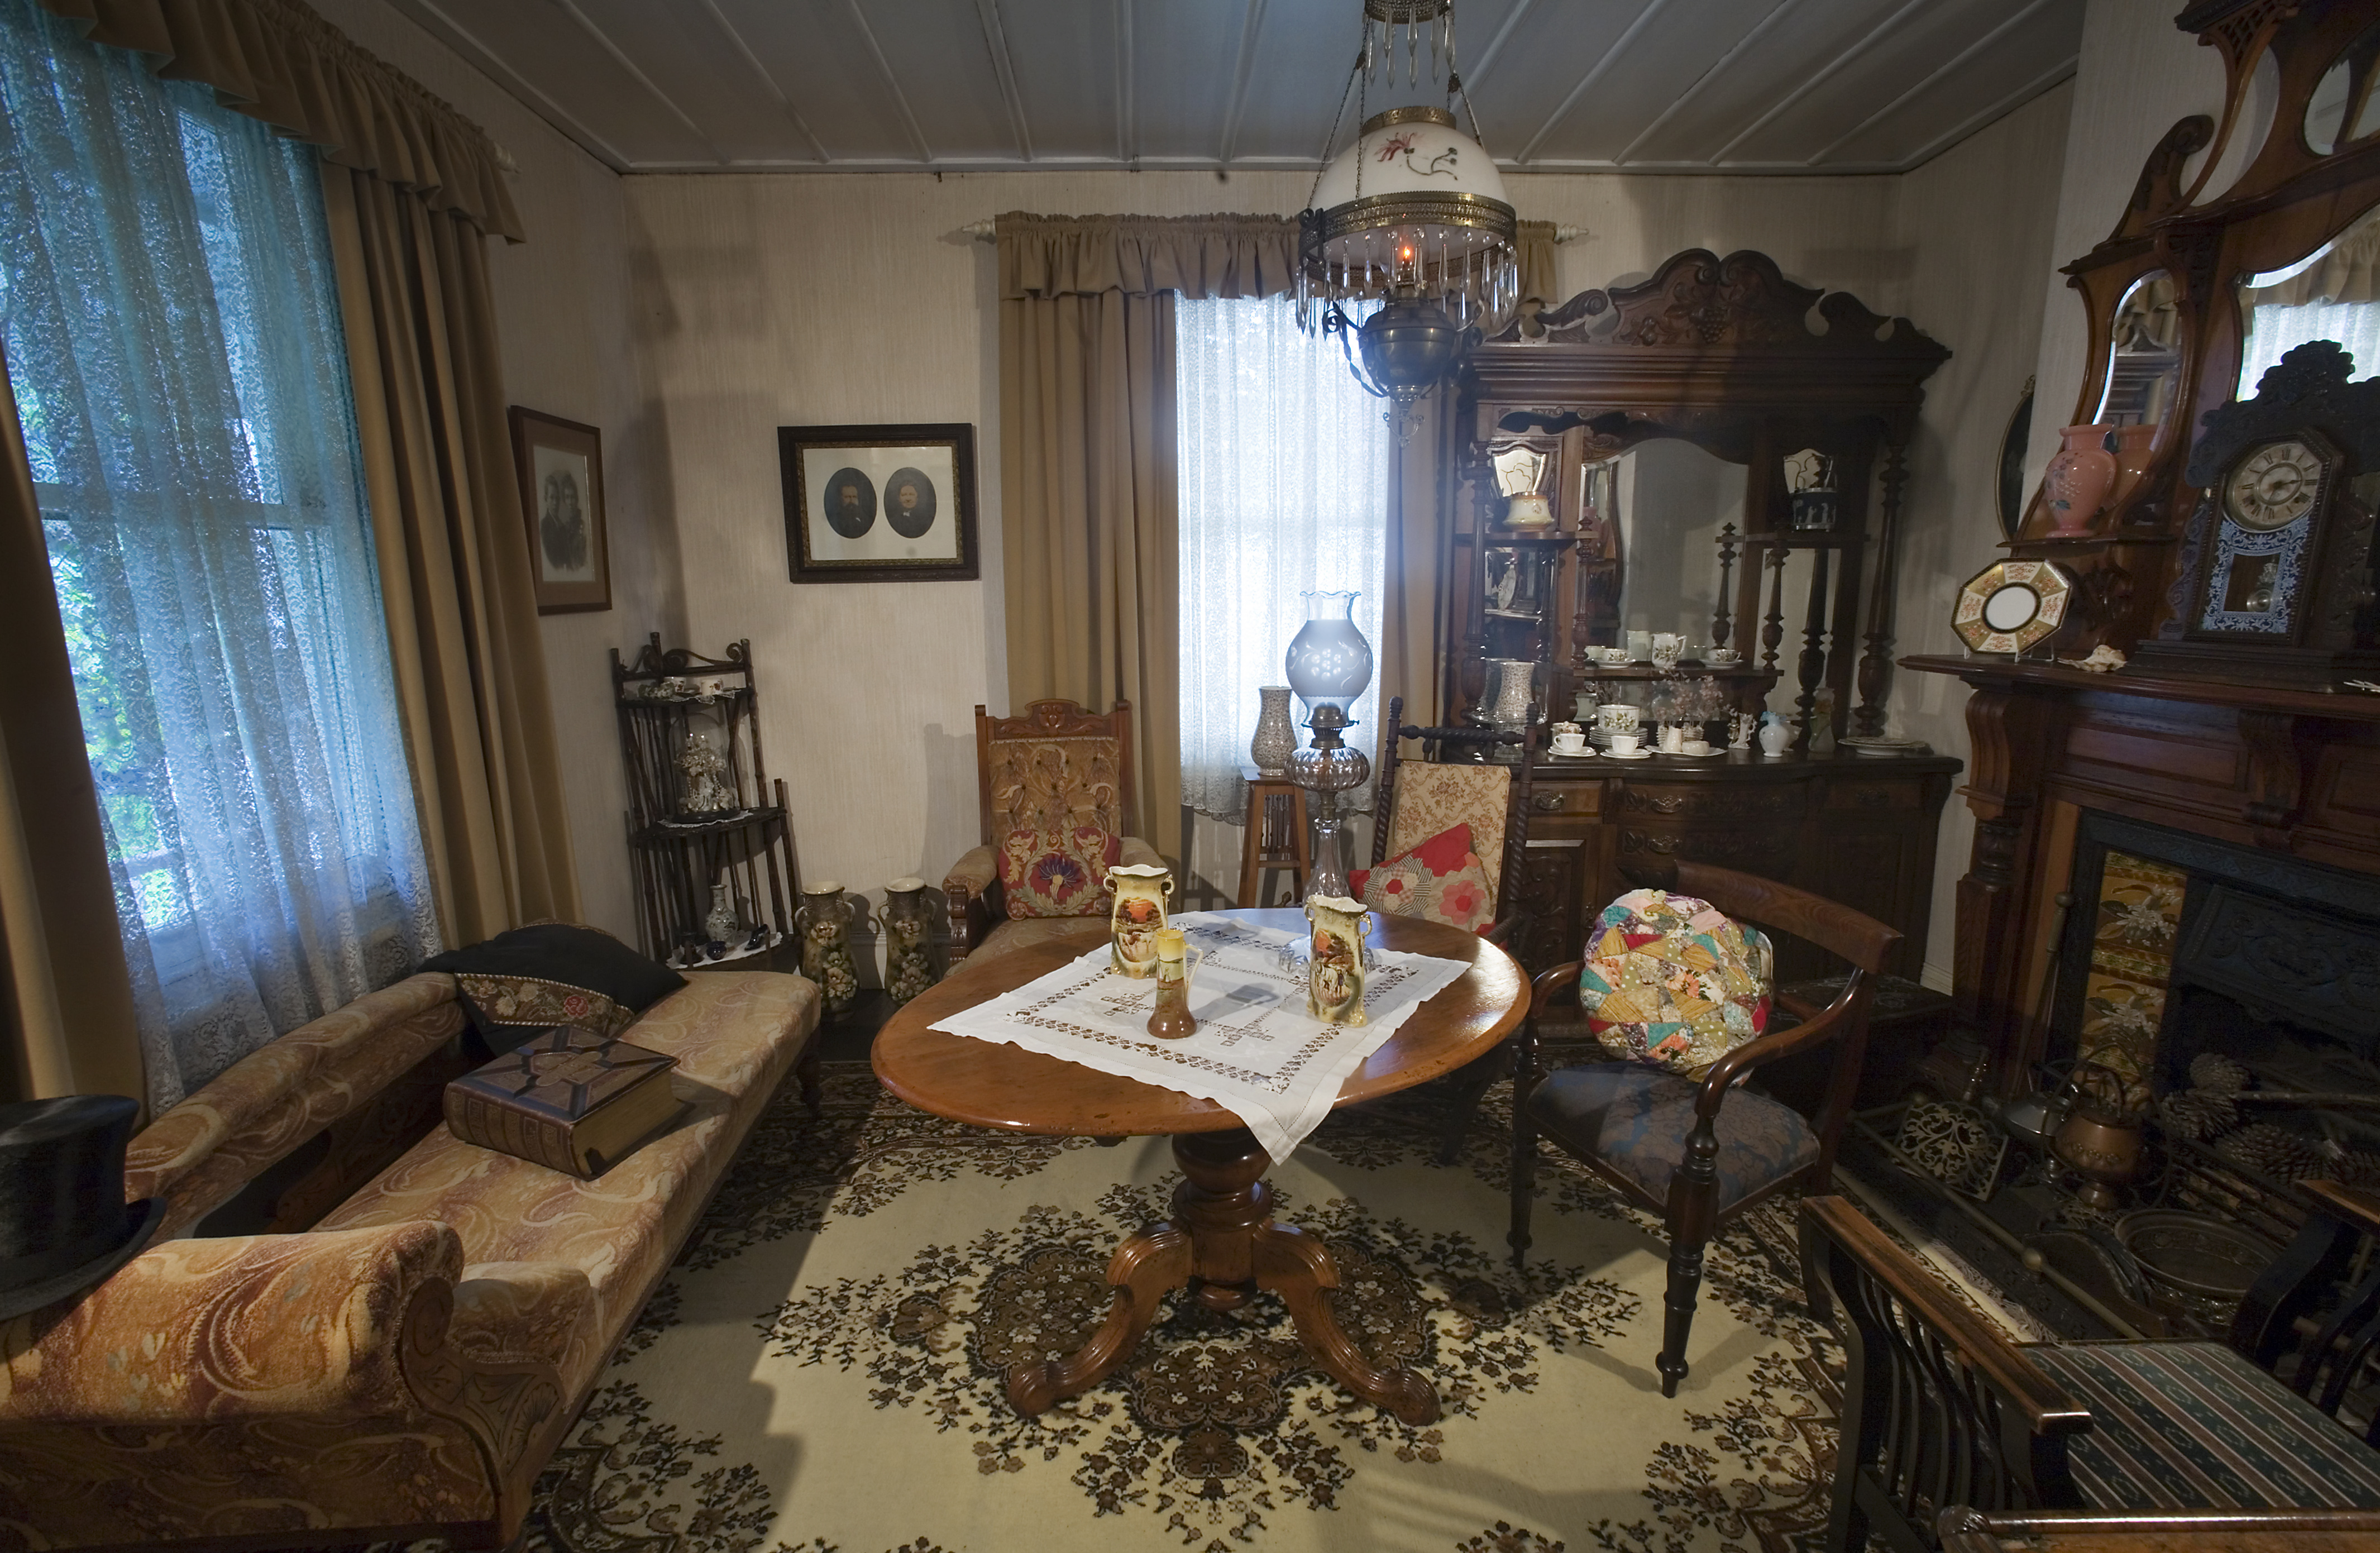 19th century house living room